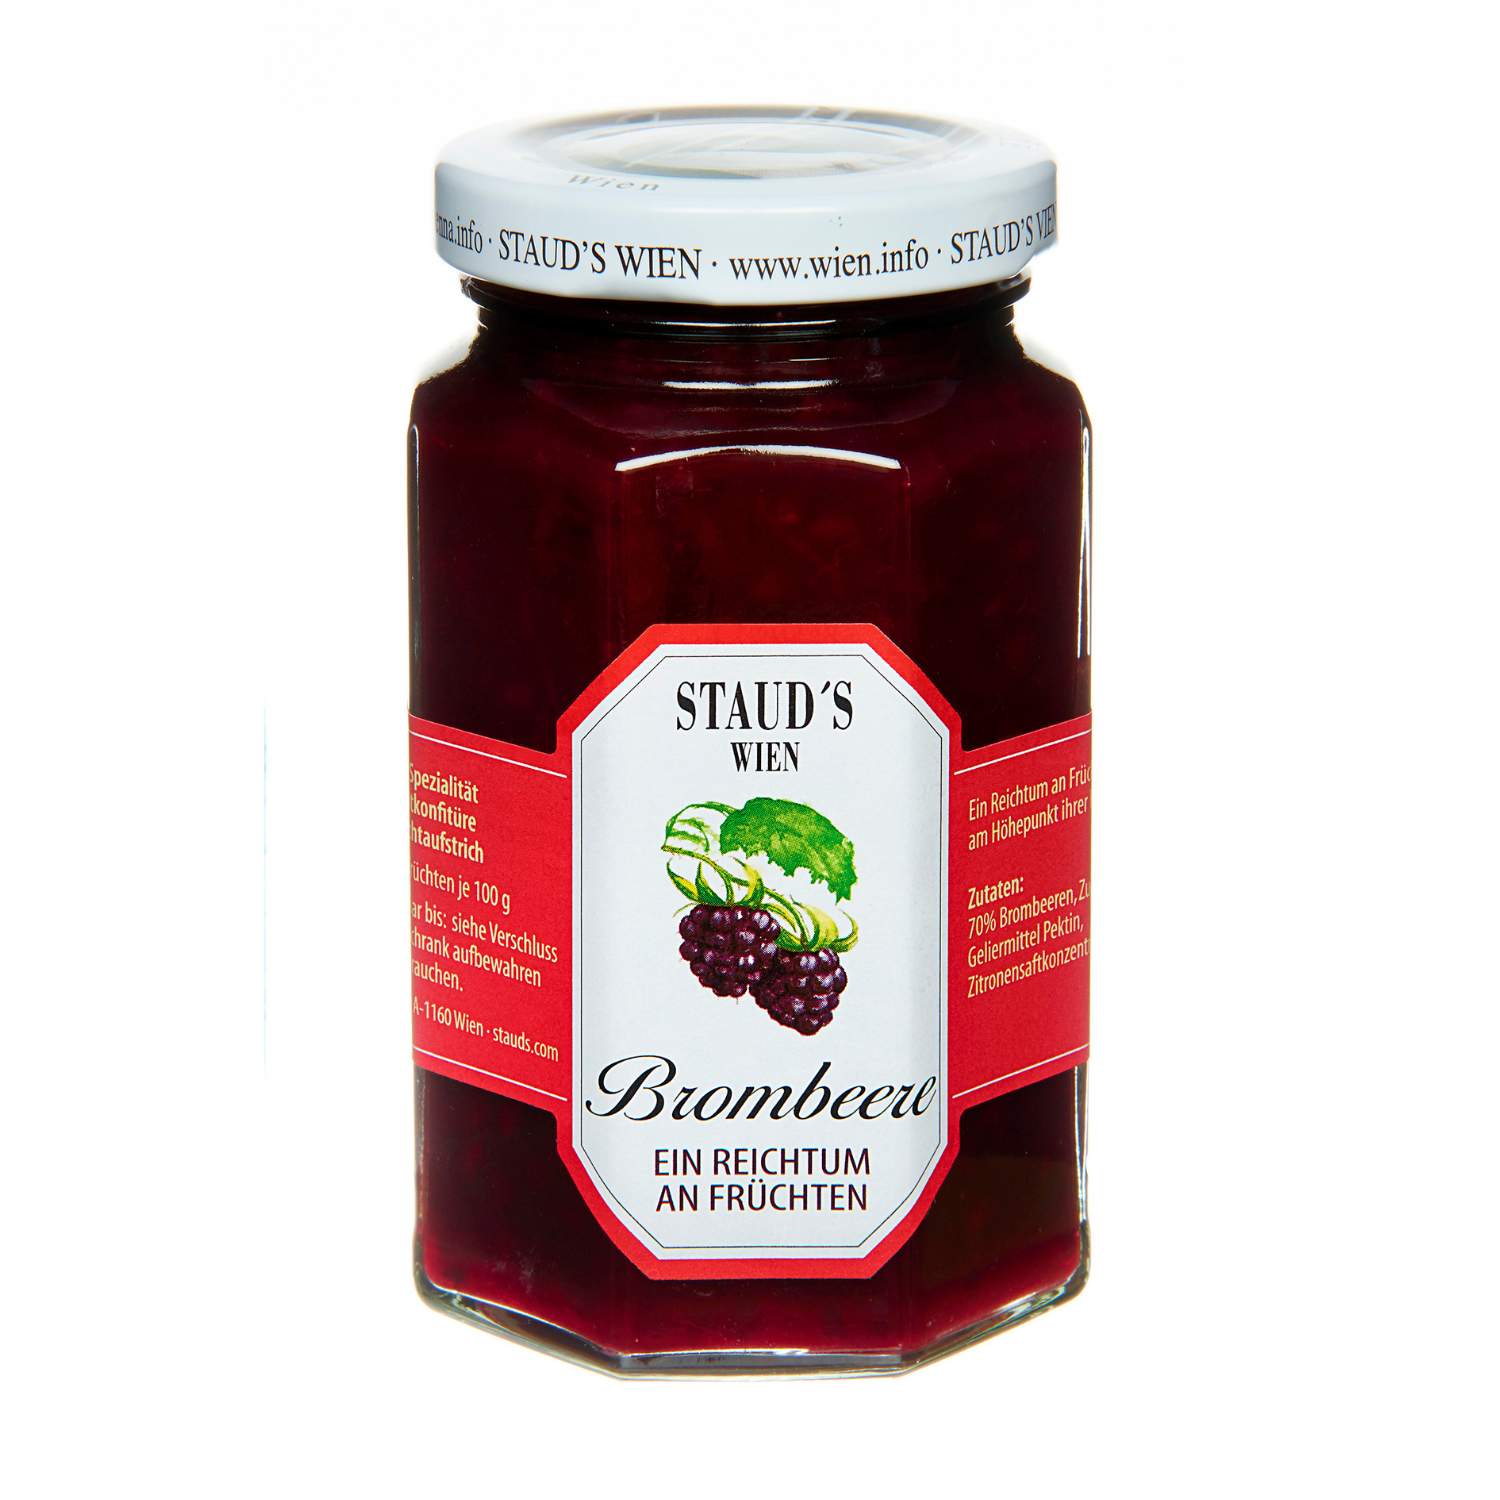 Staud's Austrian Blackberry Jam